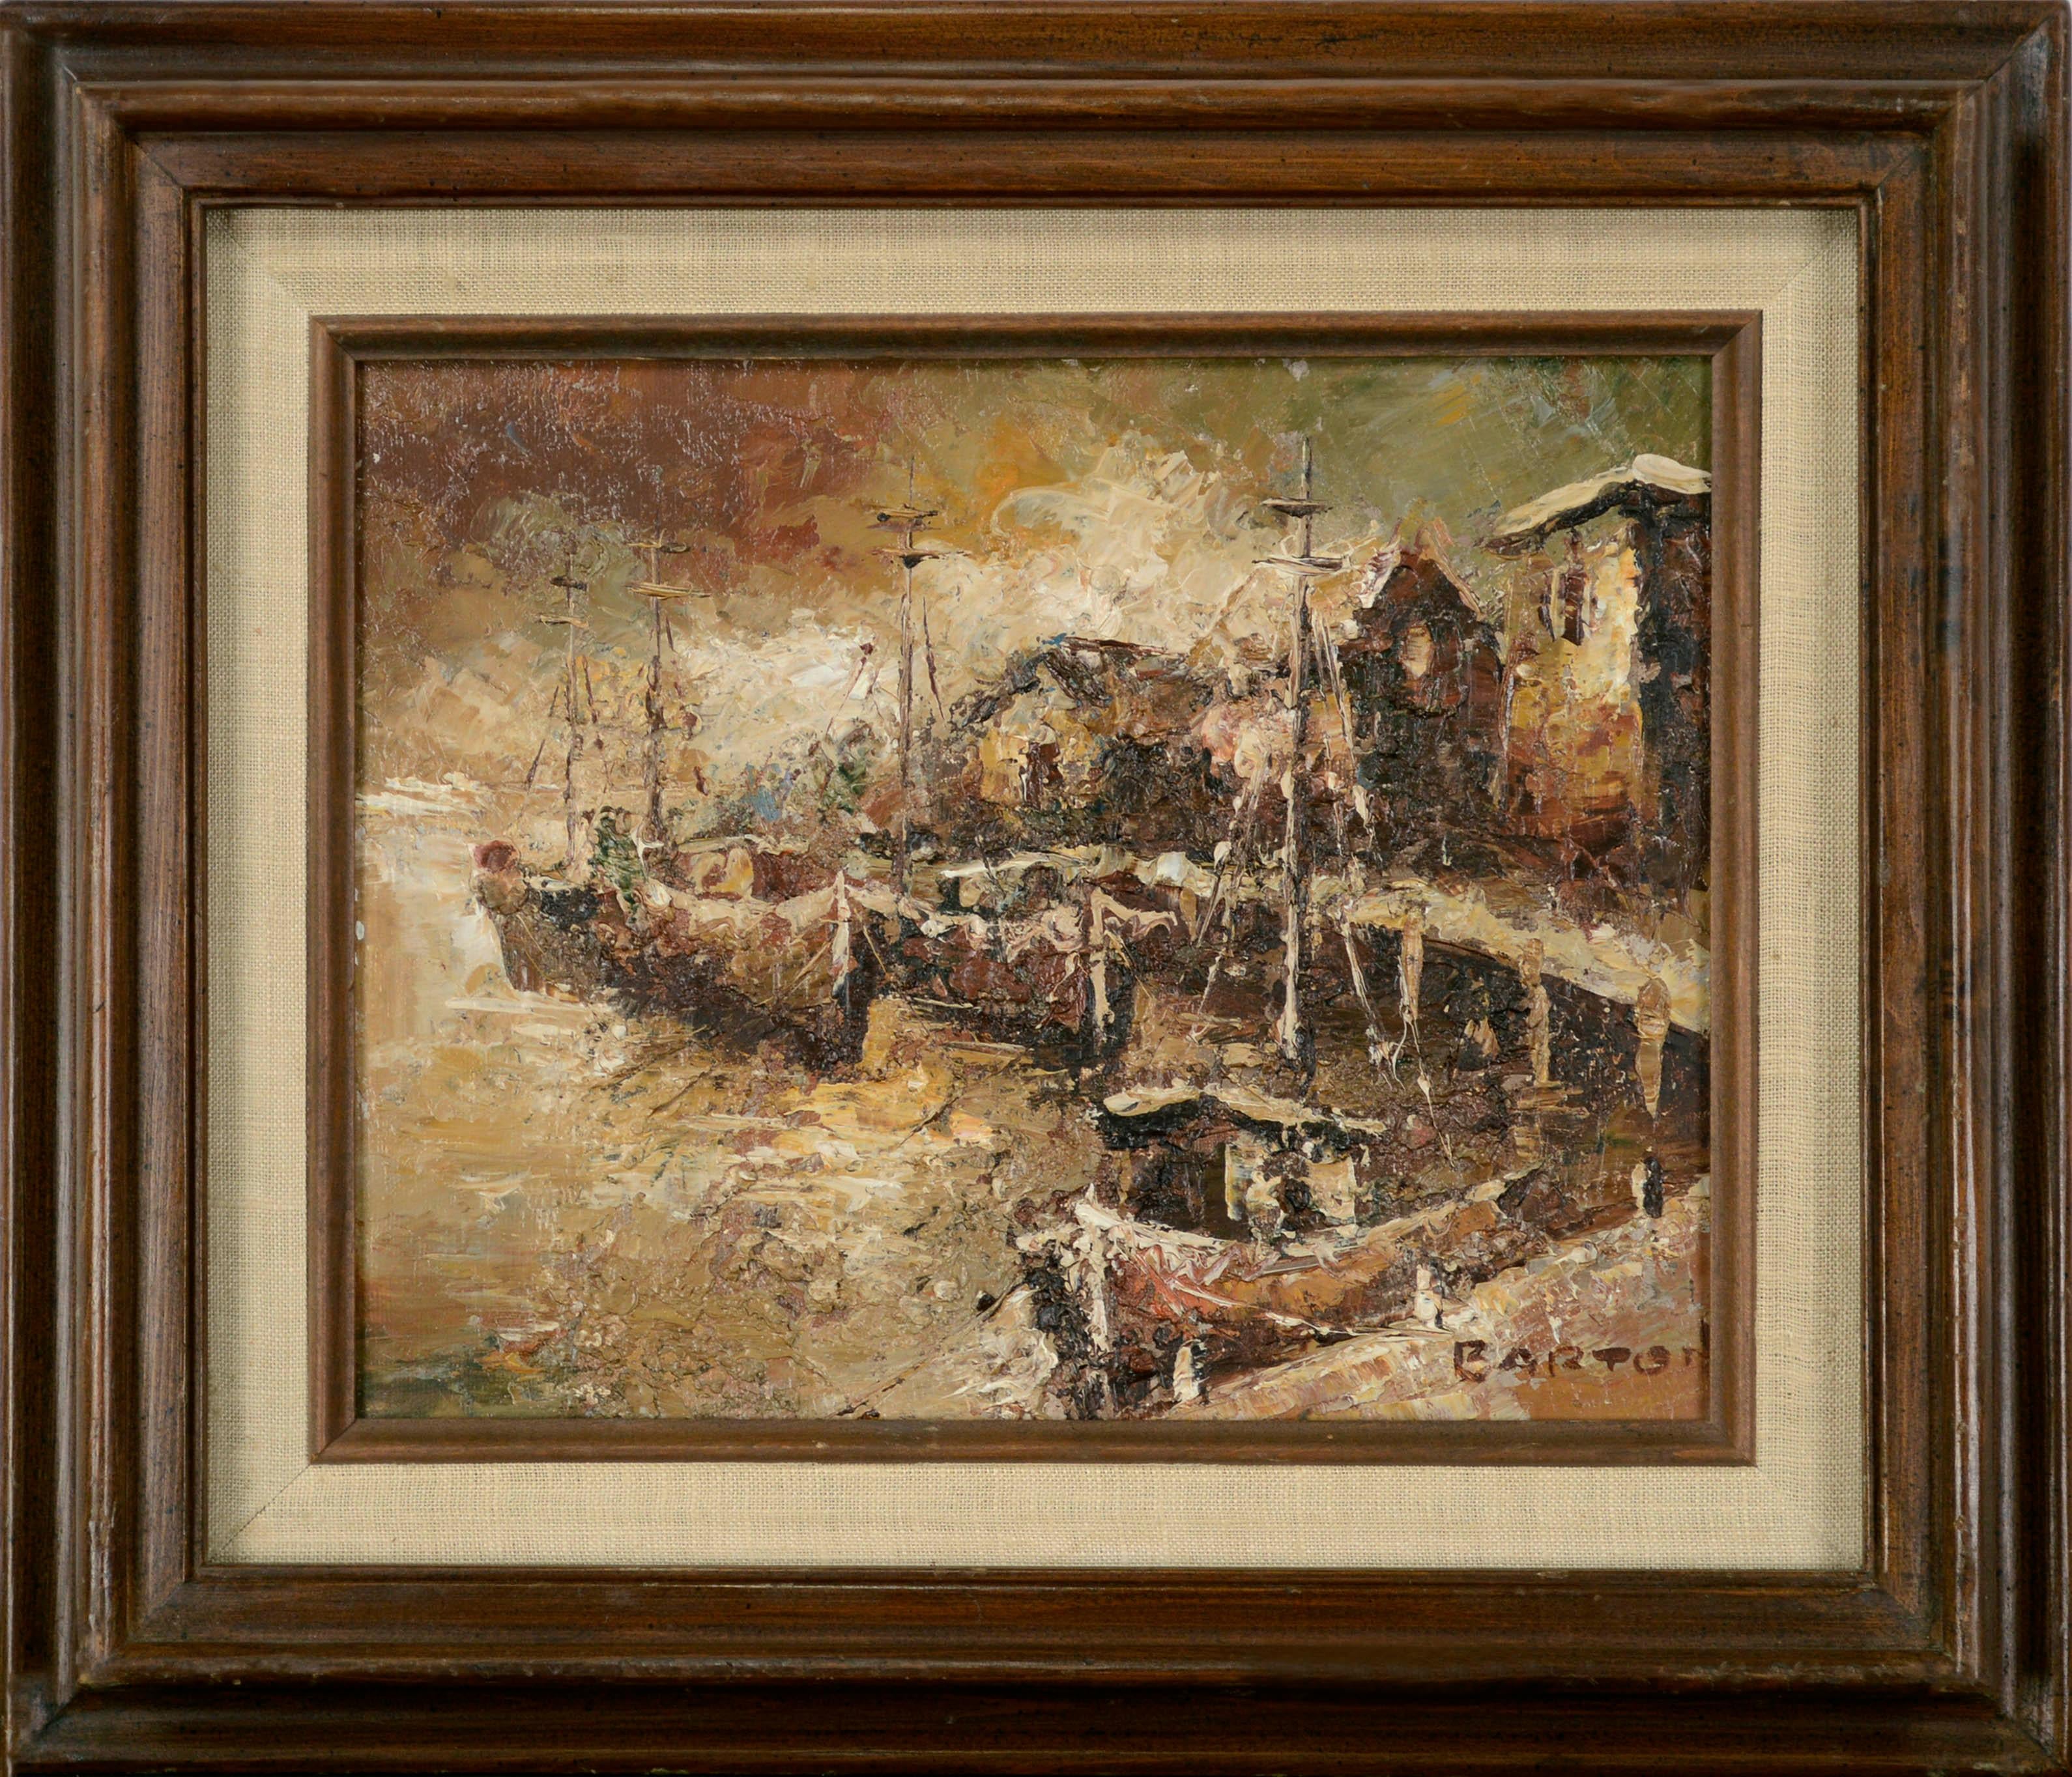 Barton Landscape Painting - Fishing Boats at the Wharf - Mid Century Impasto Earthtone Landscape 